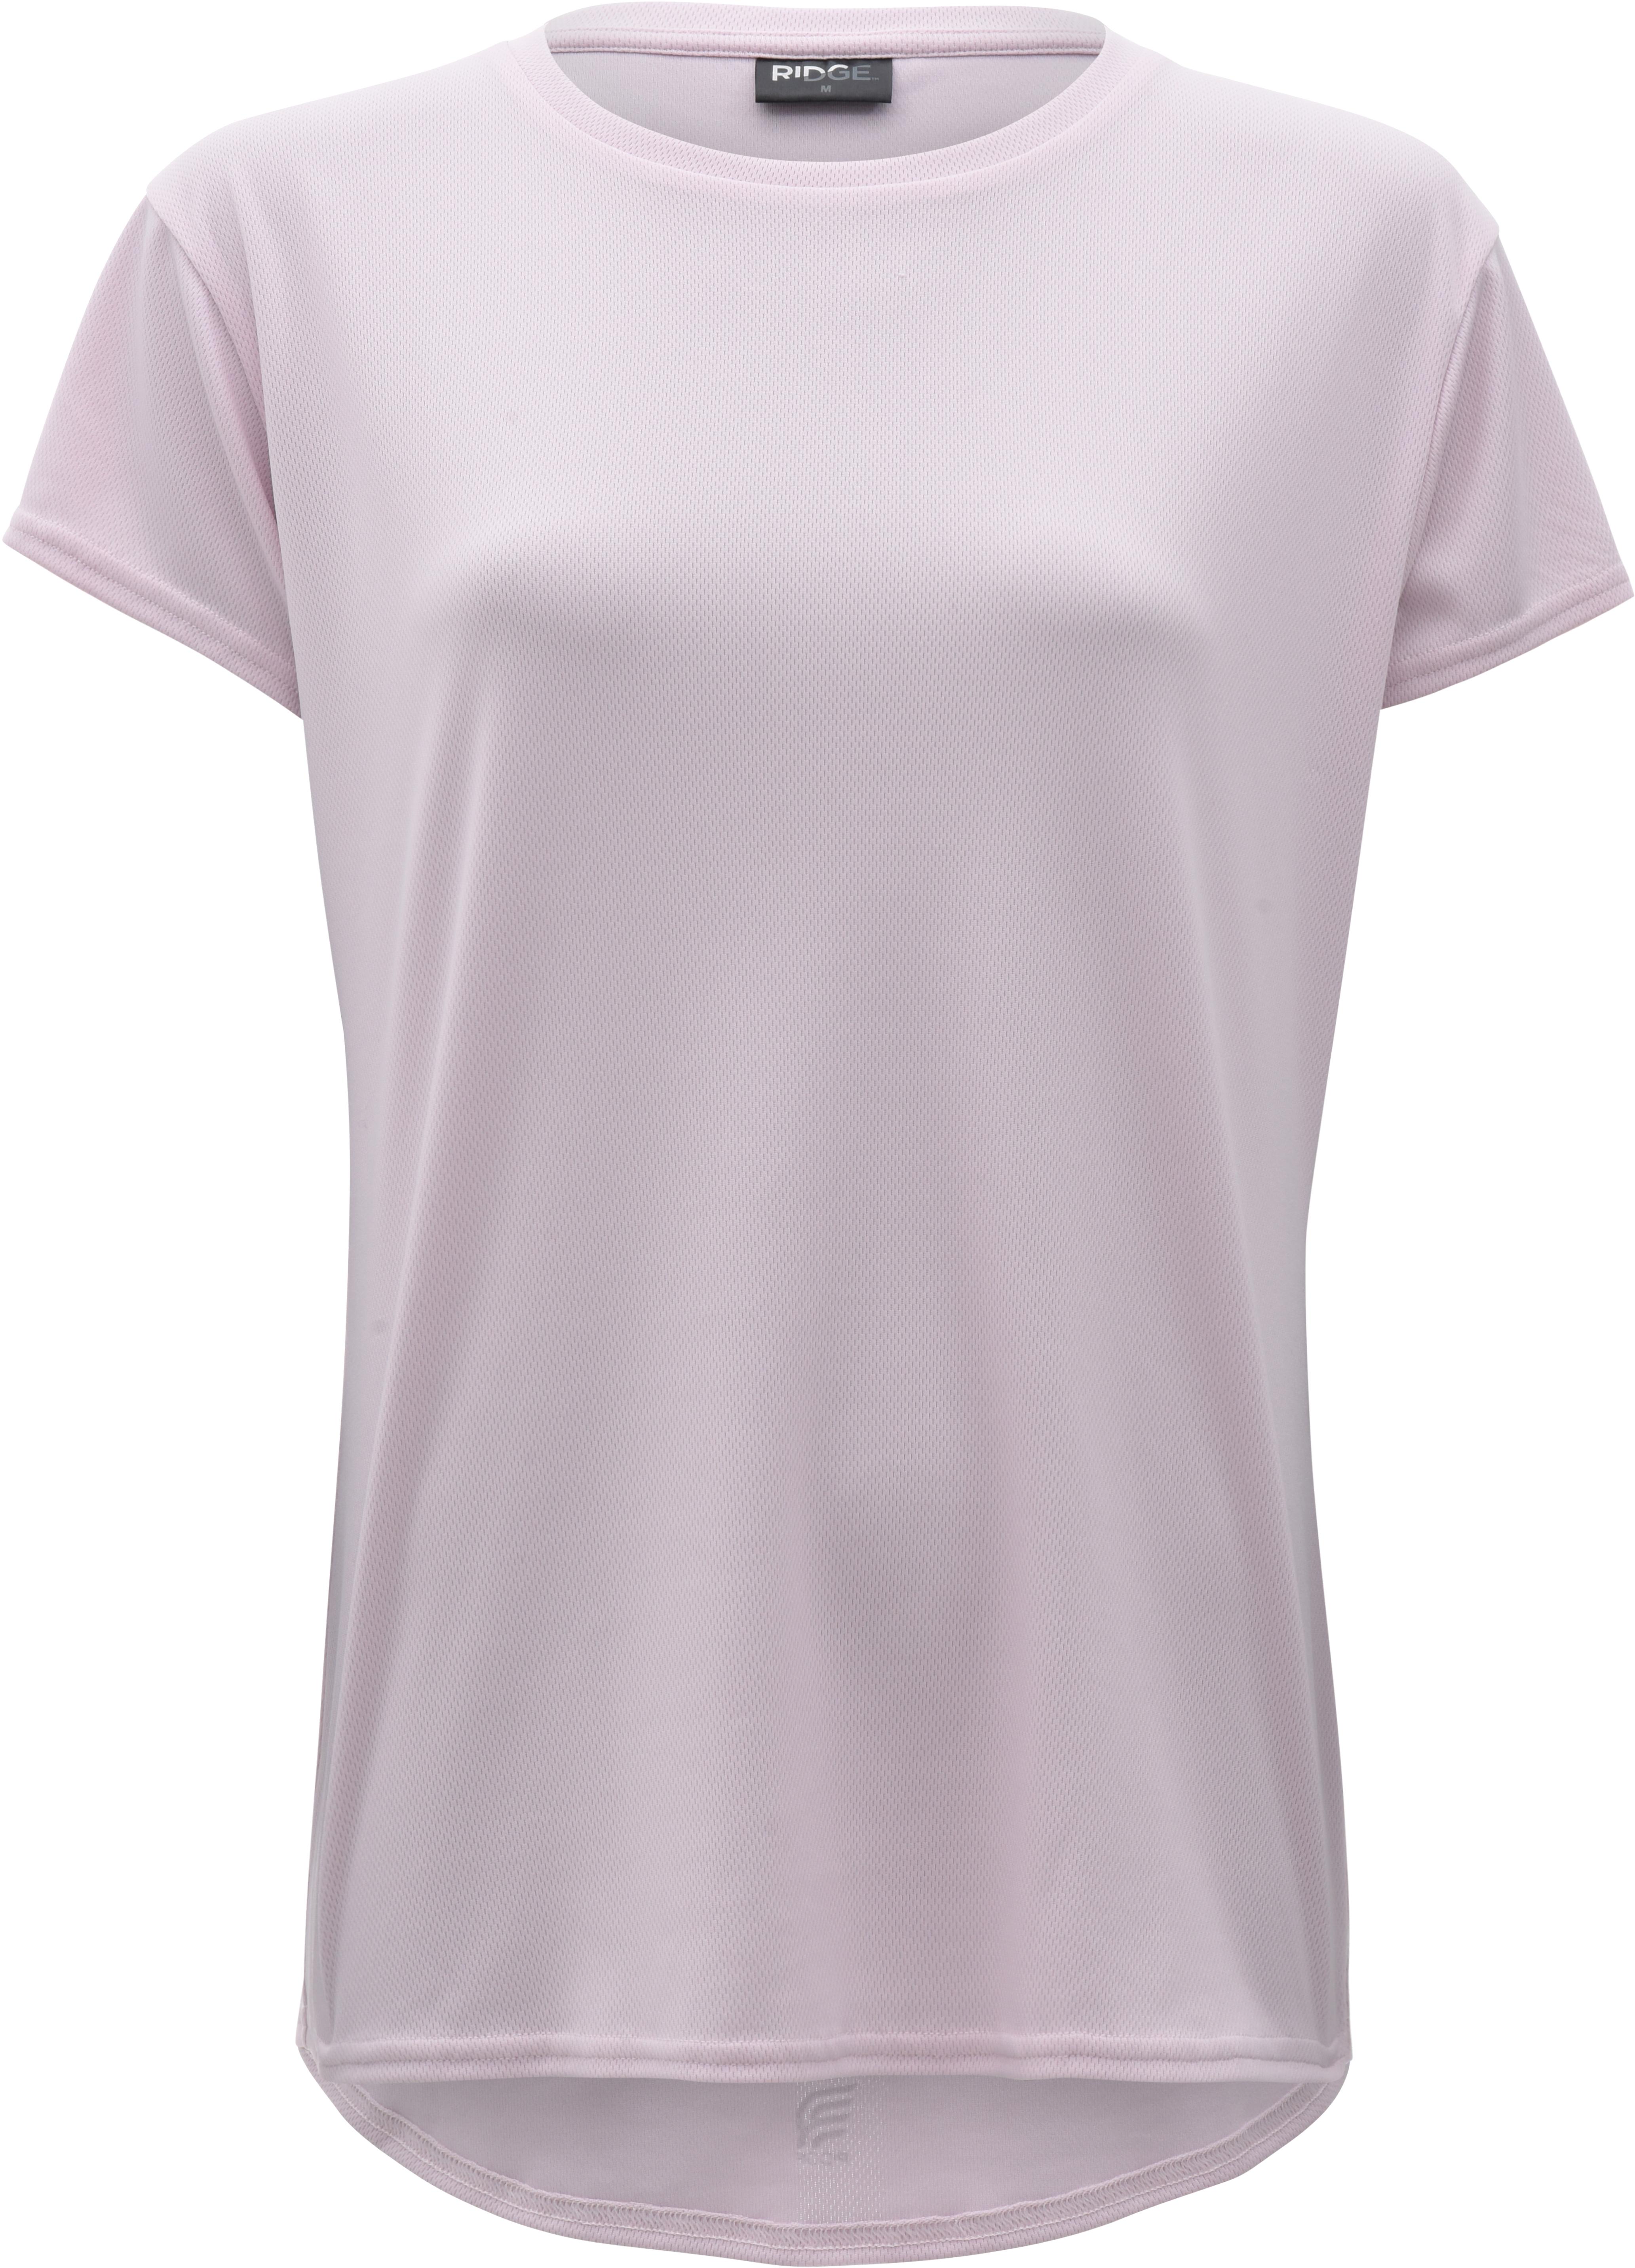 Ridge Womens Cycling T Shirt - Pink X Large